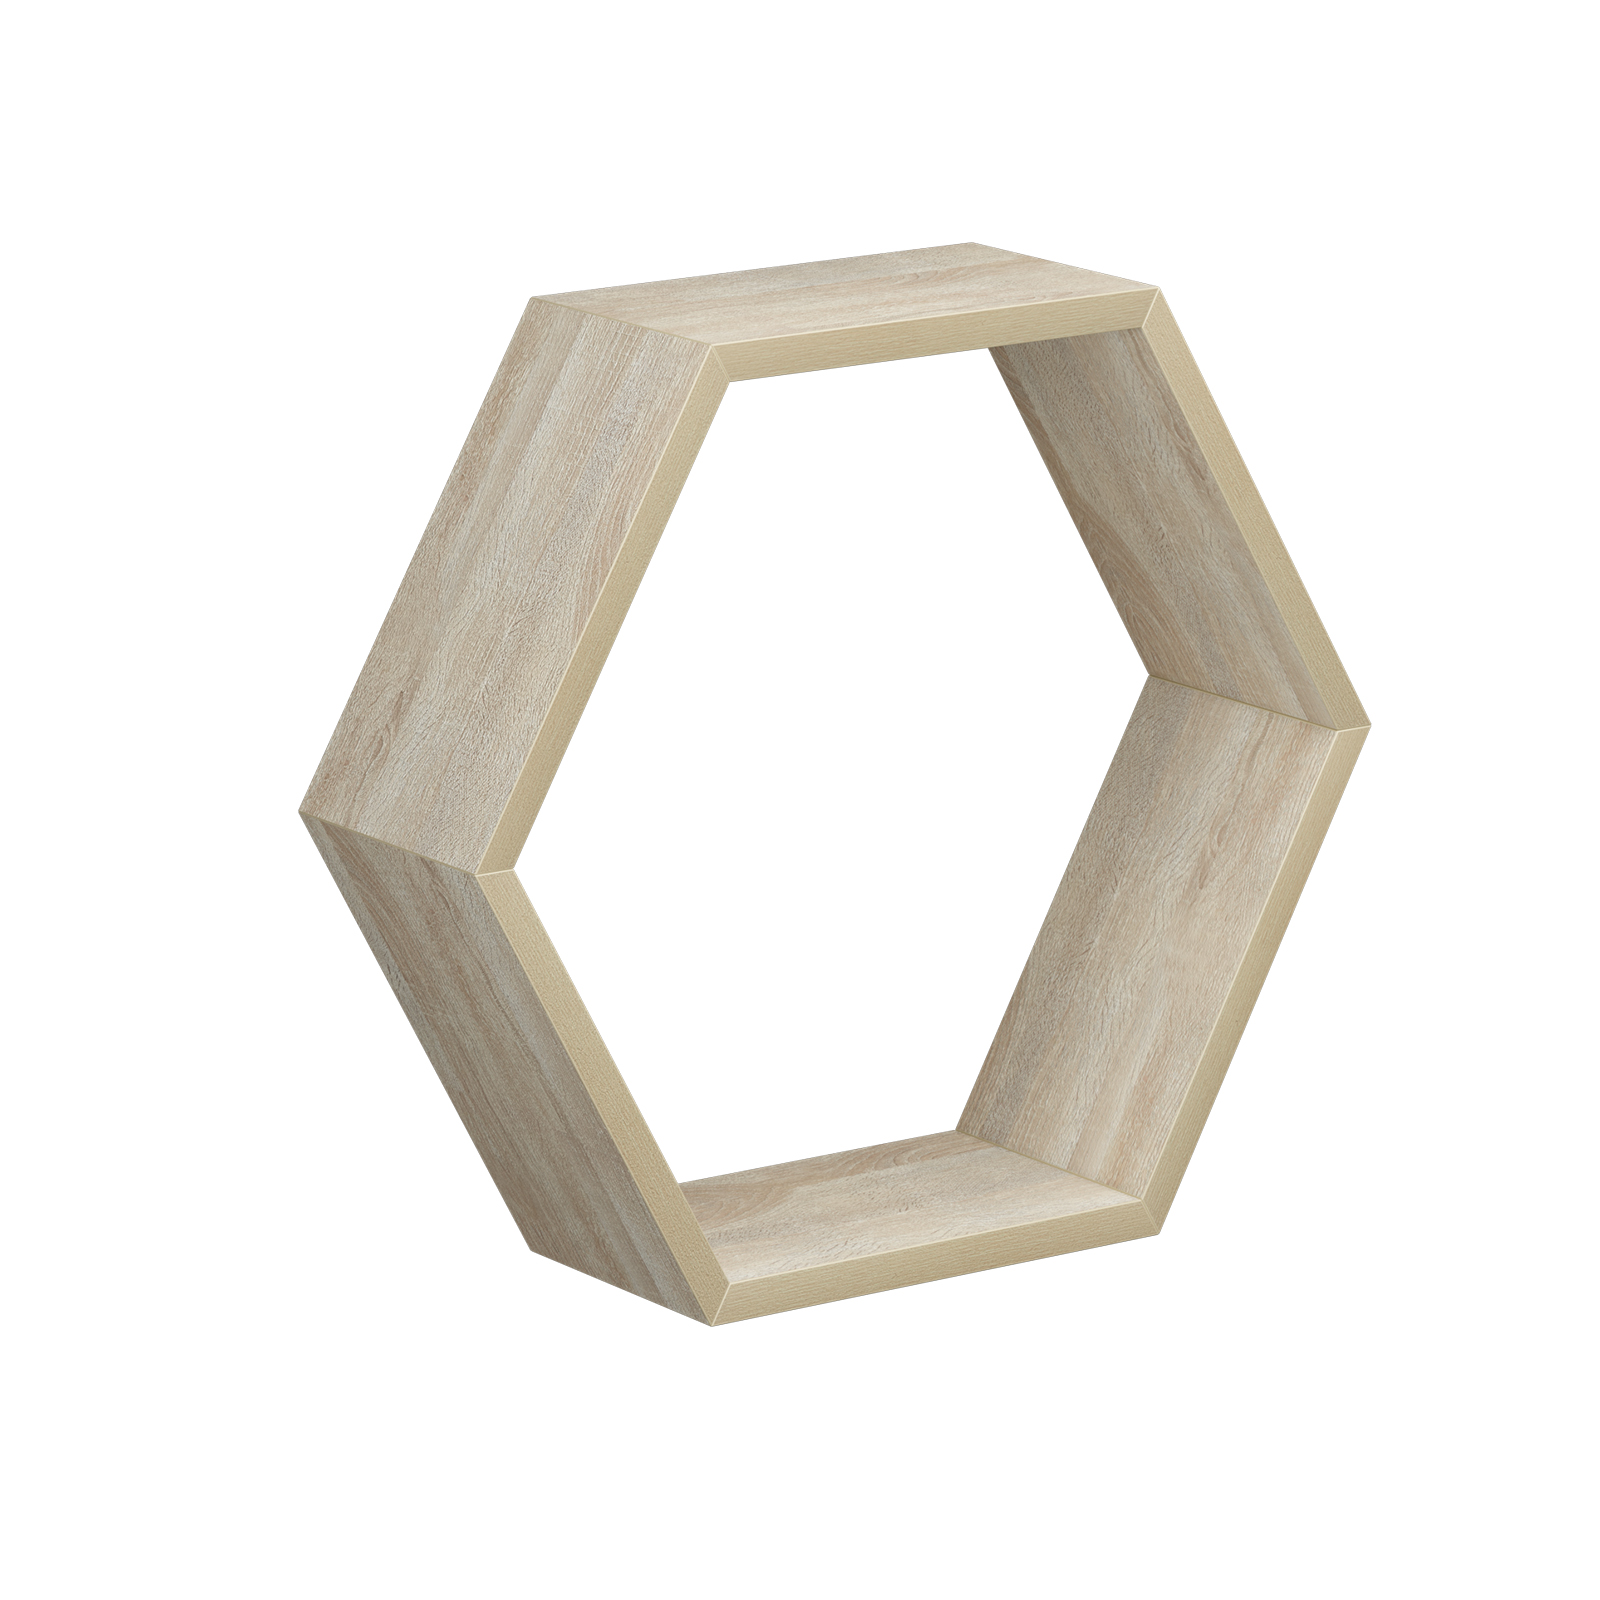 Hexagonal Wall Shelf Oak